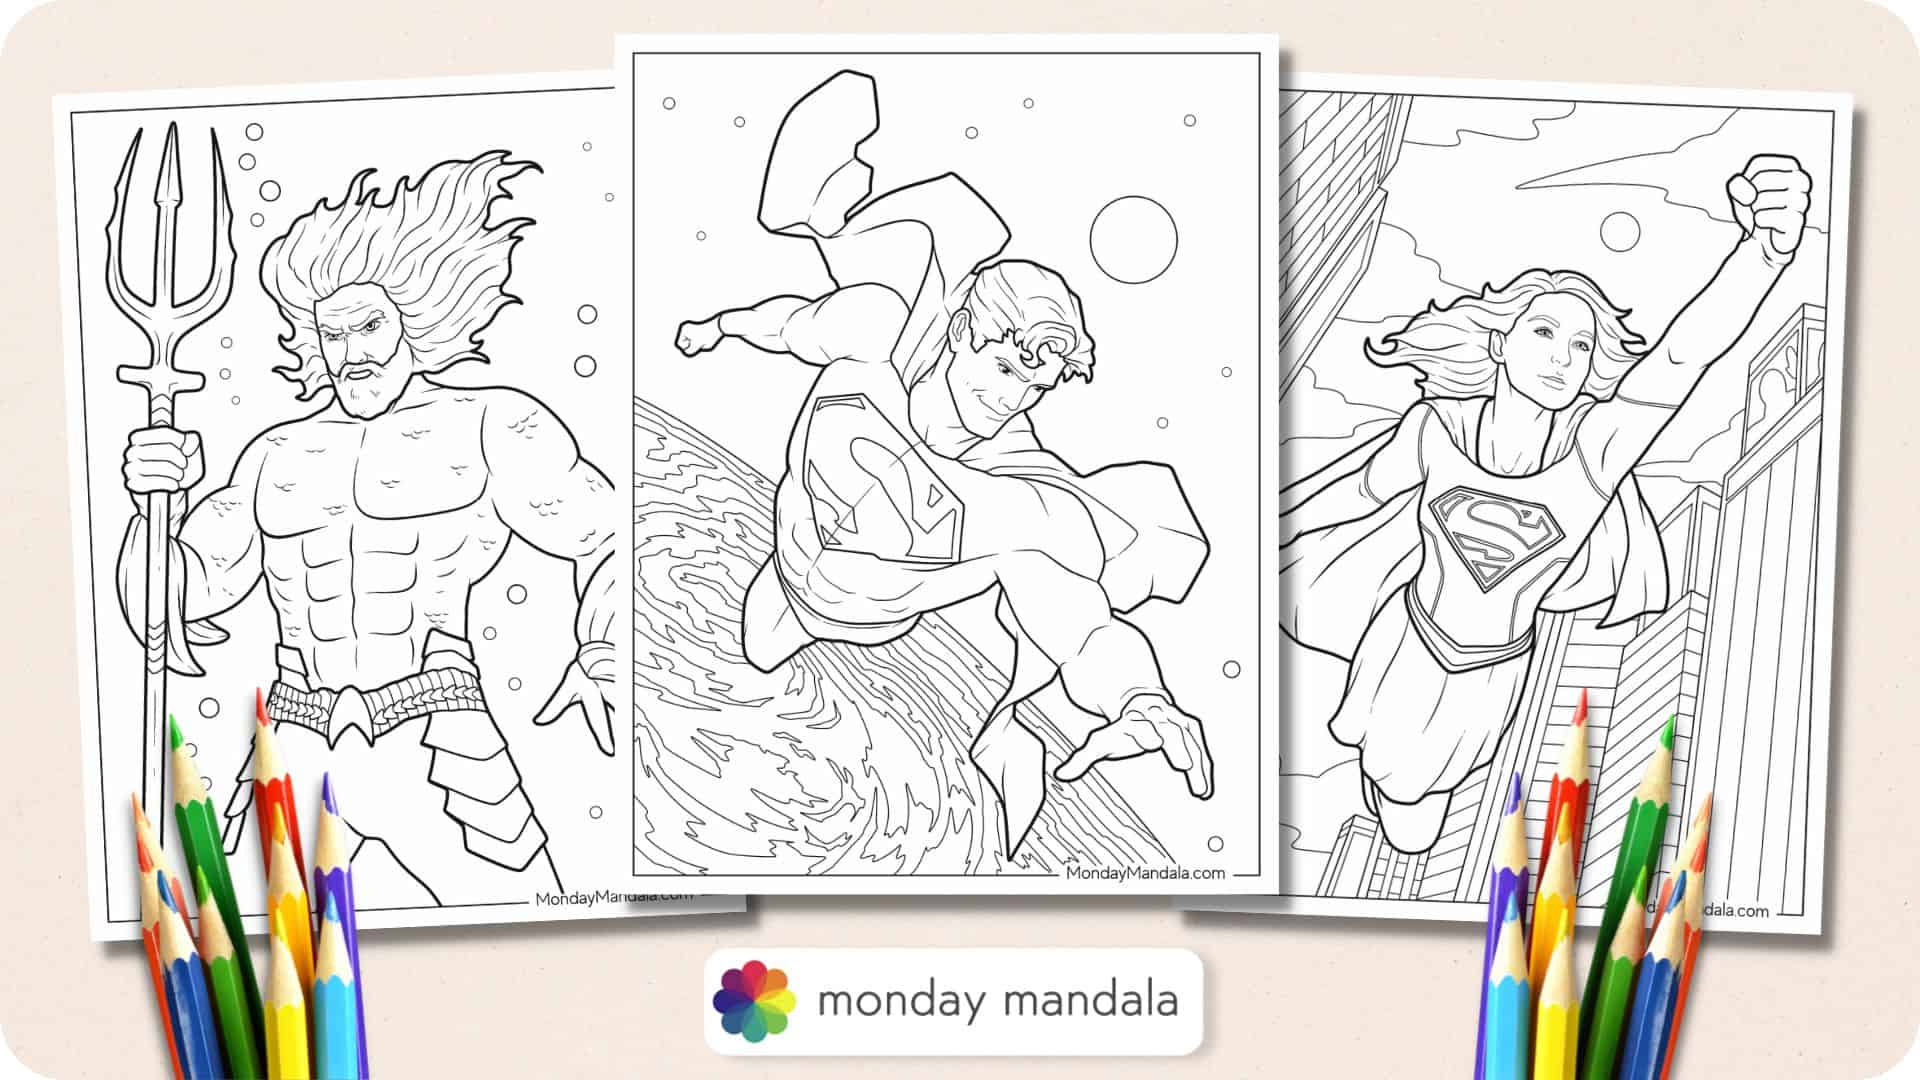 Superhero coloring pages free pdf printables